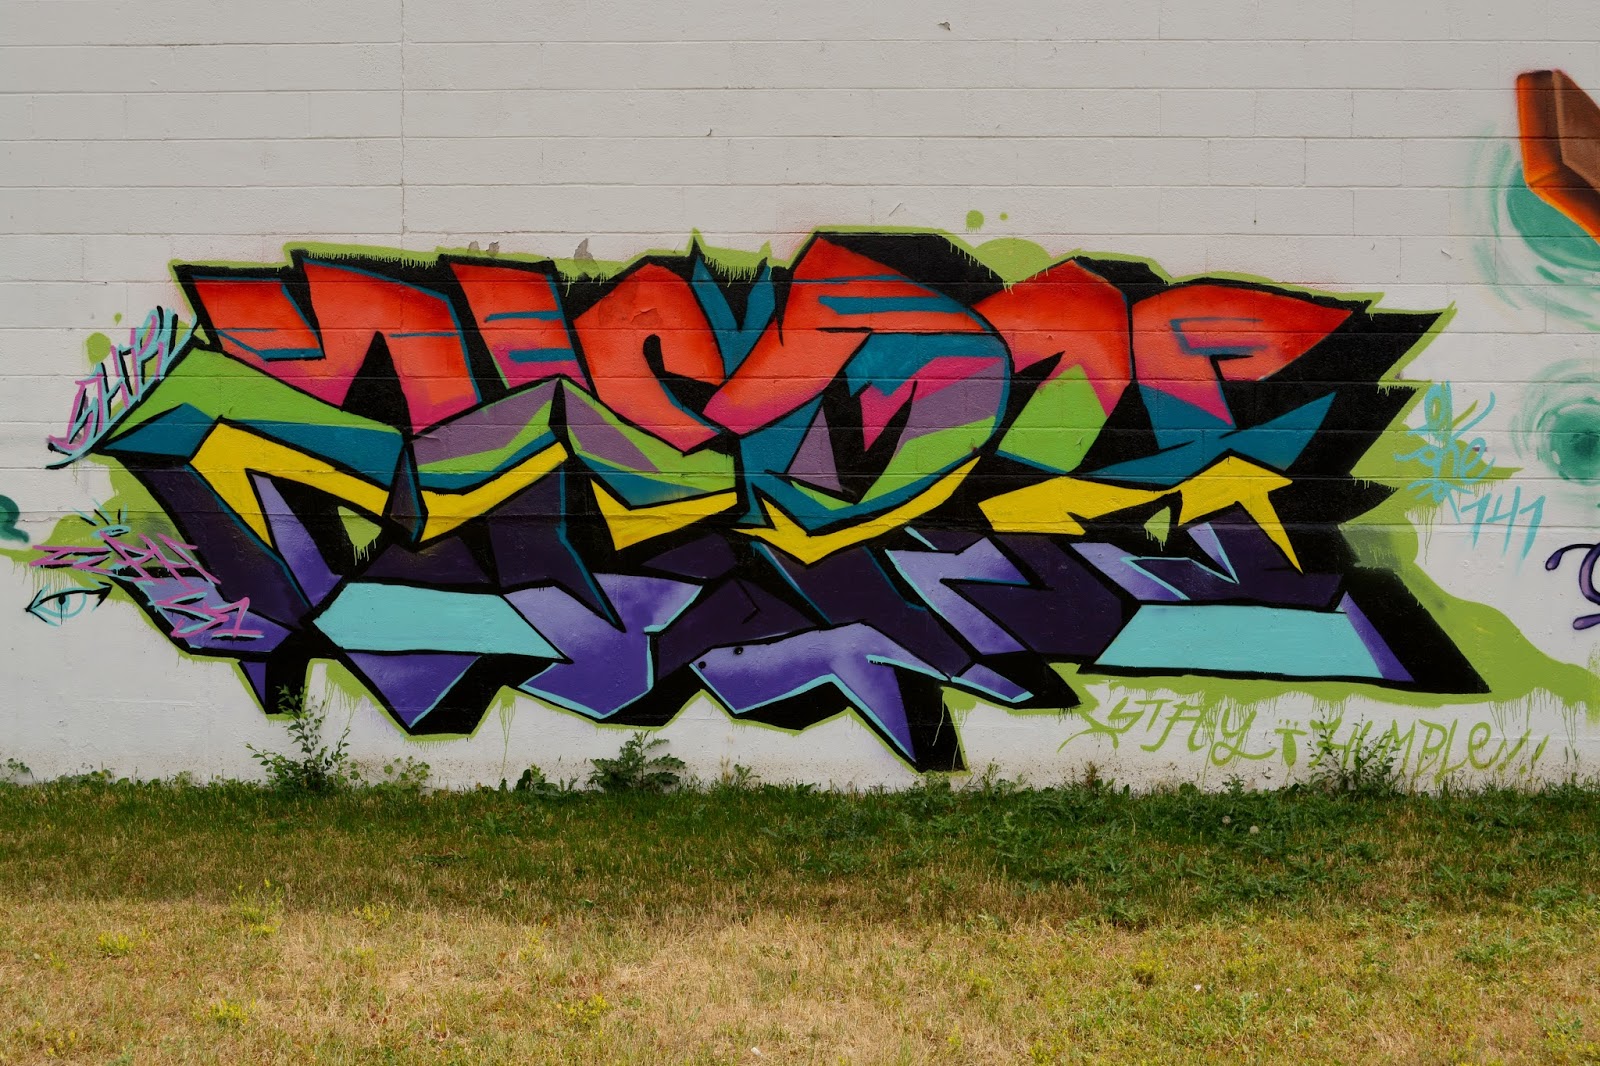 Doke Graffiti Shop